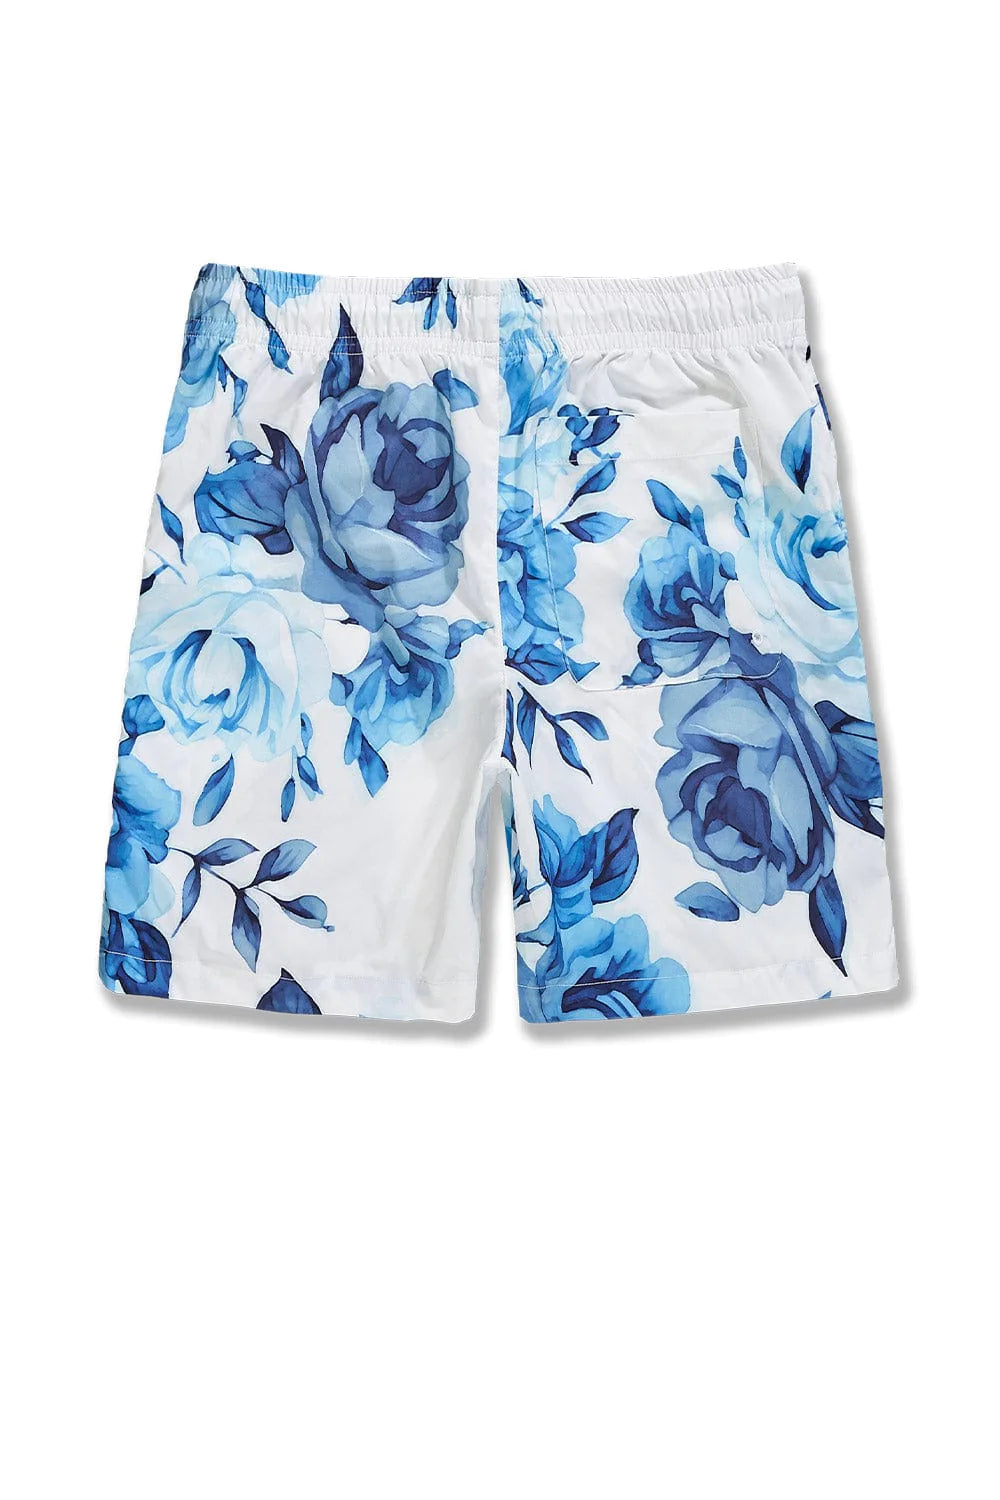 “NEW” Jordan Craig Retro Lounge Shorts (Blue Floral)